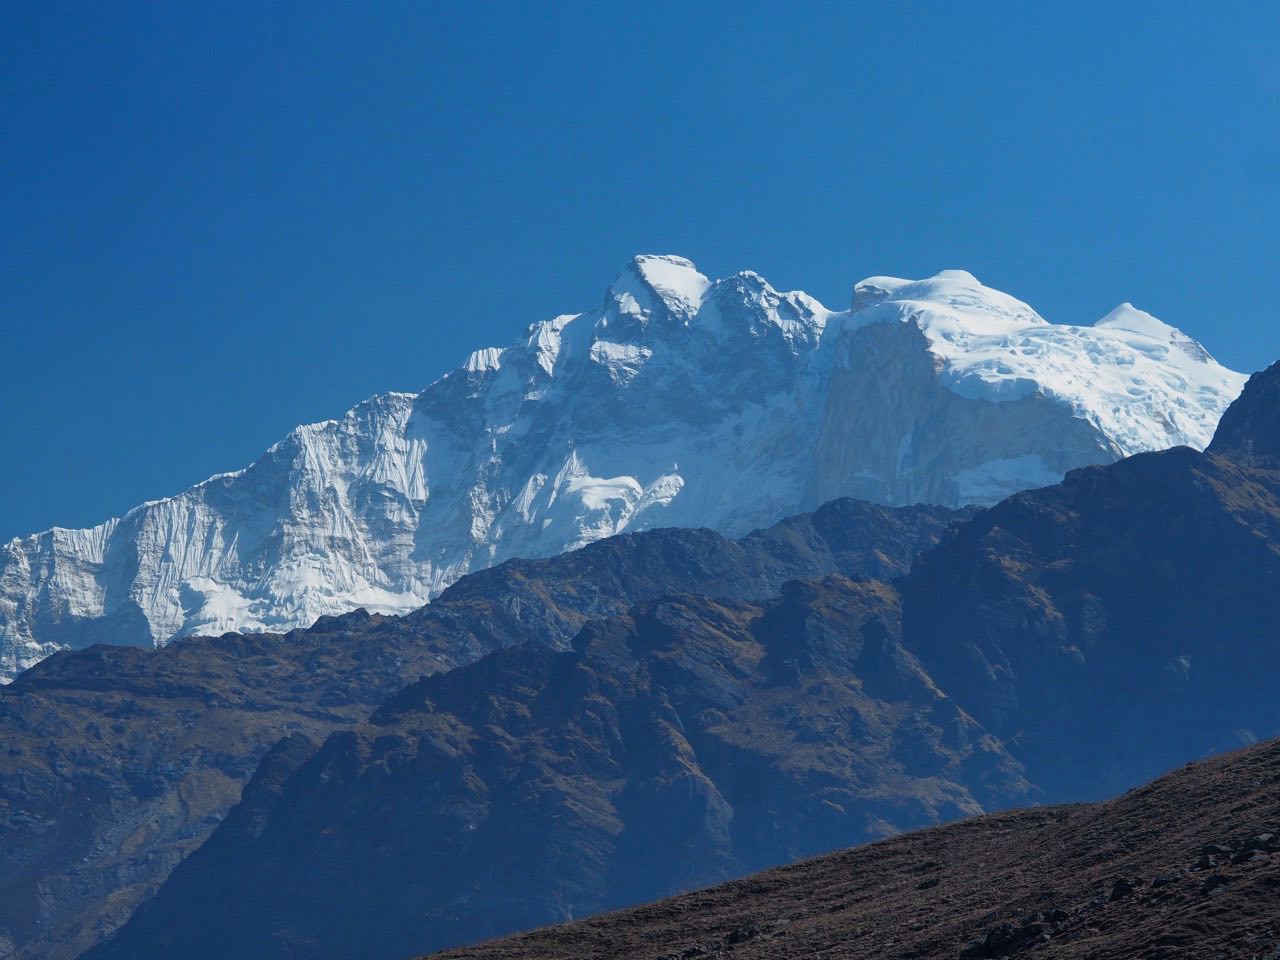 The Annapurna Massif